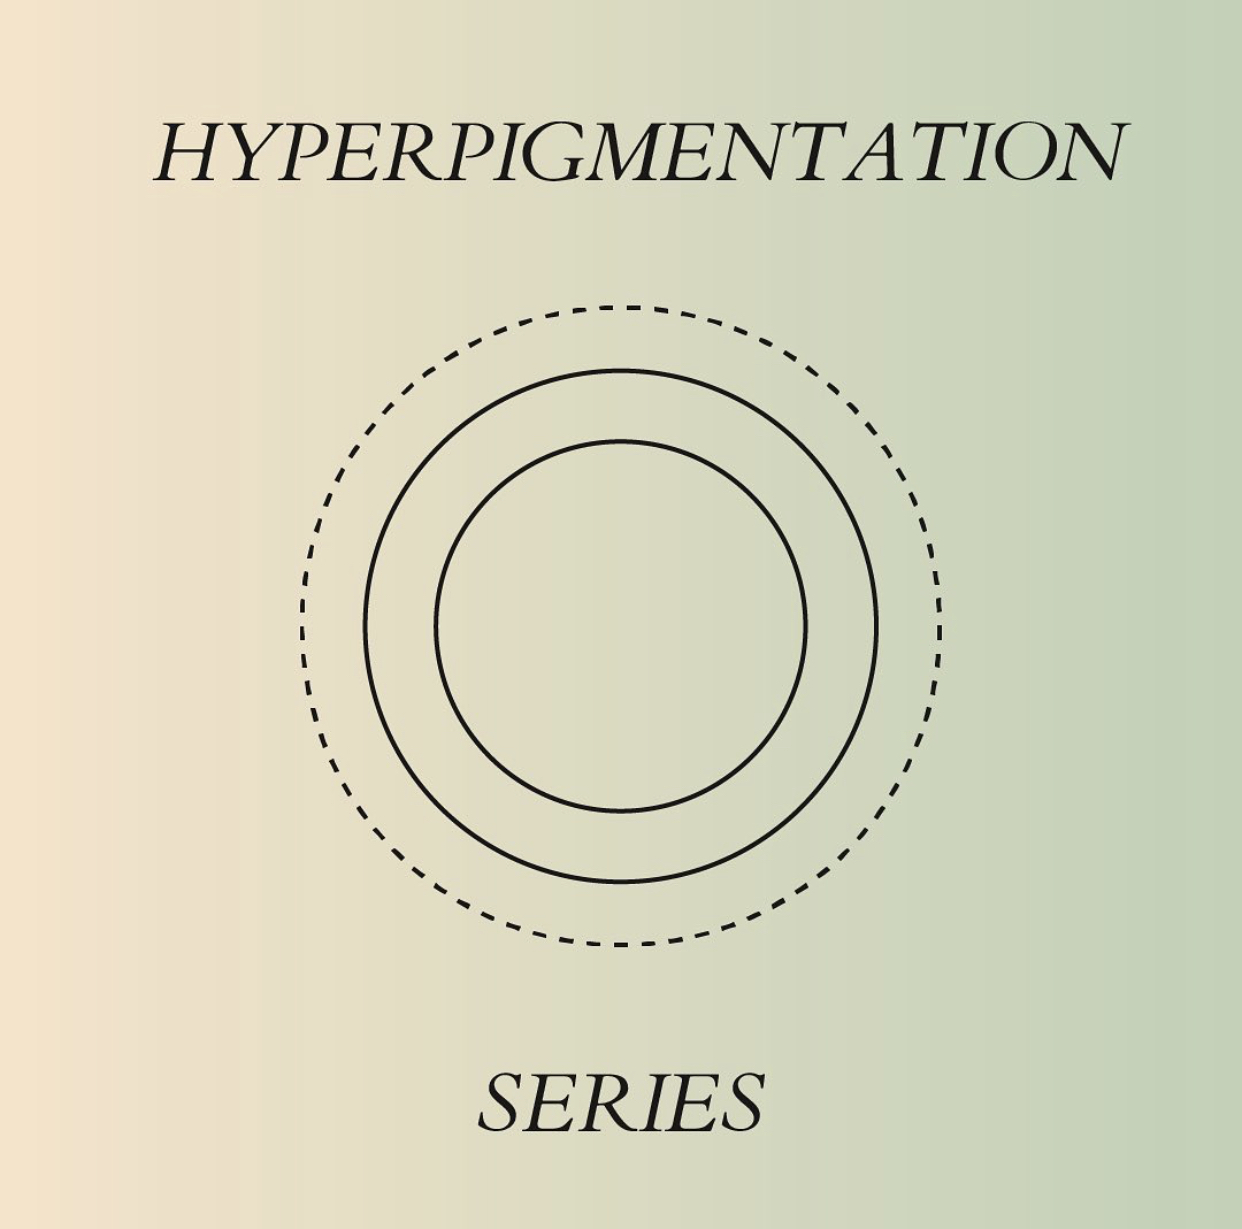 Coming soon: Hyperpigmentation series